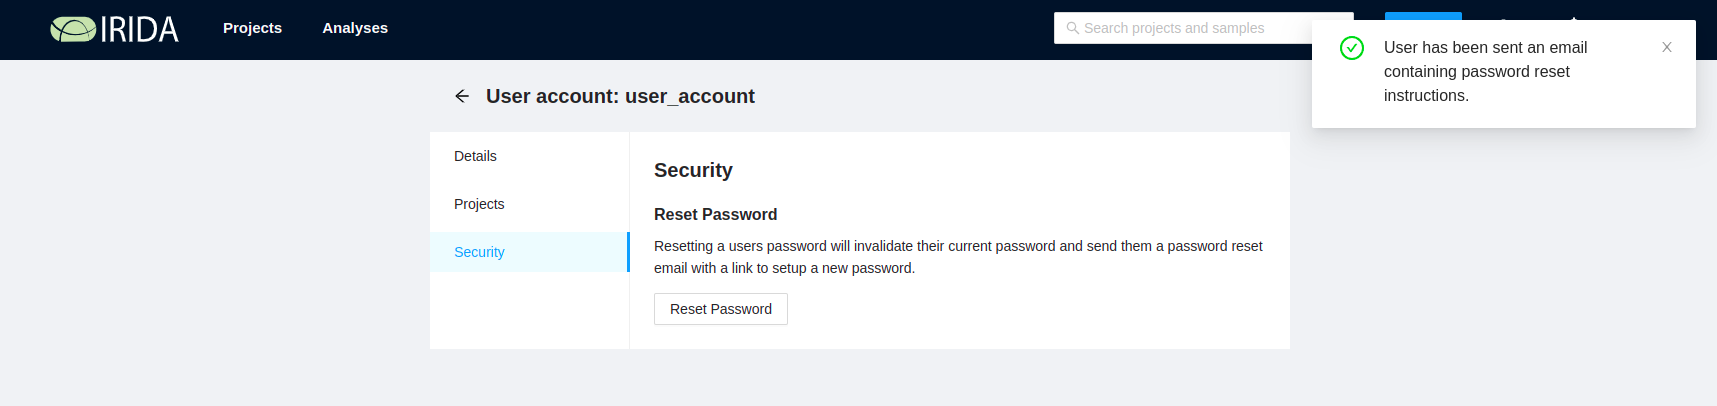 Reset password success notification.